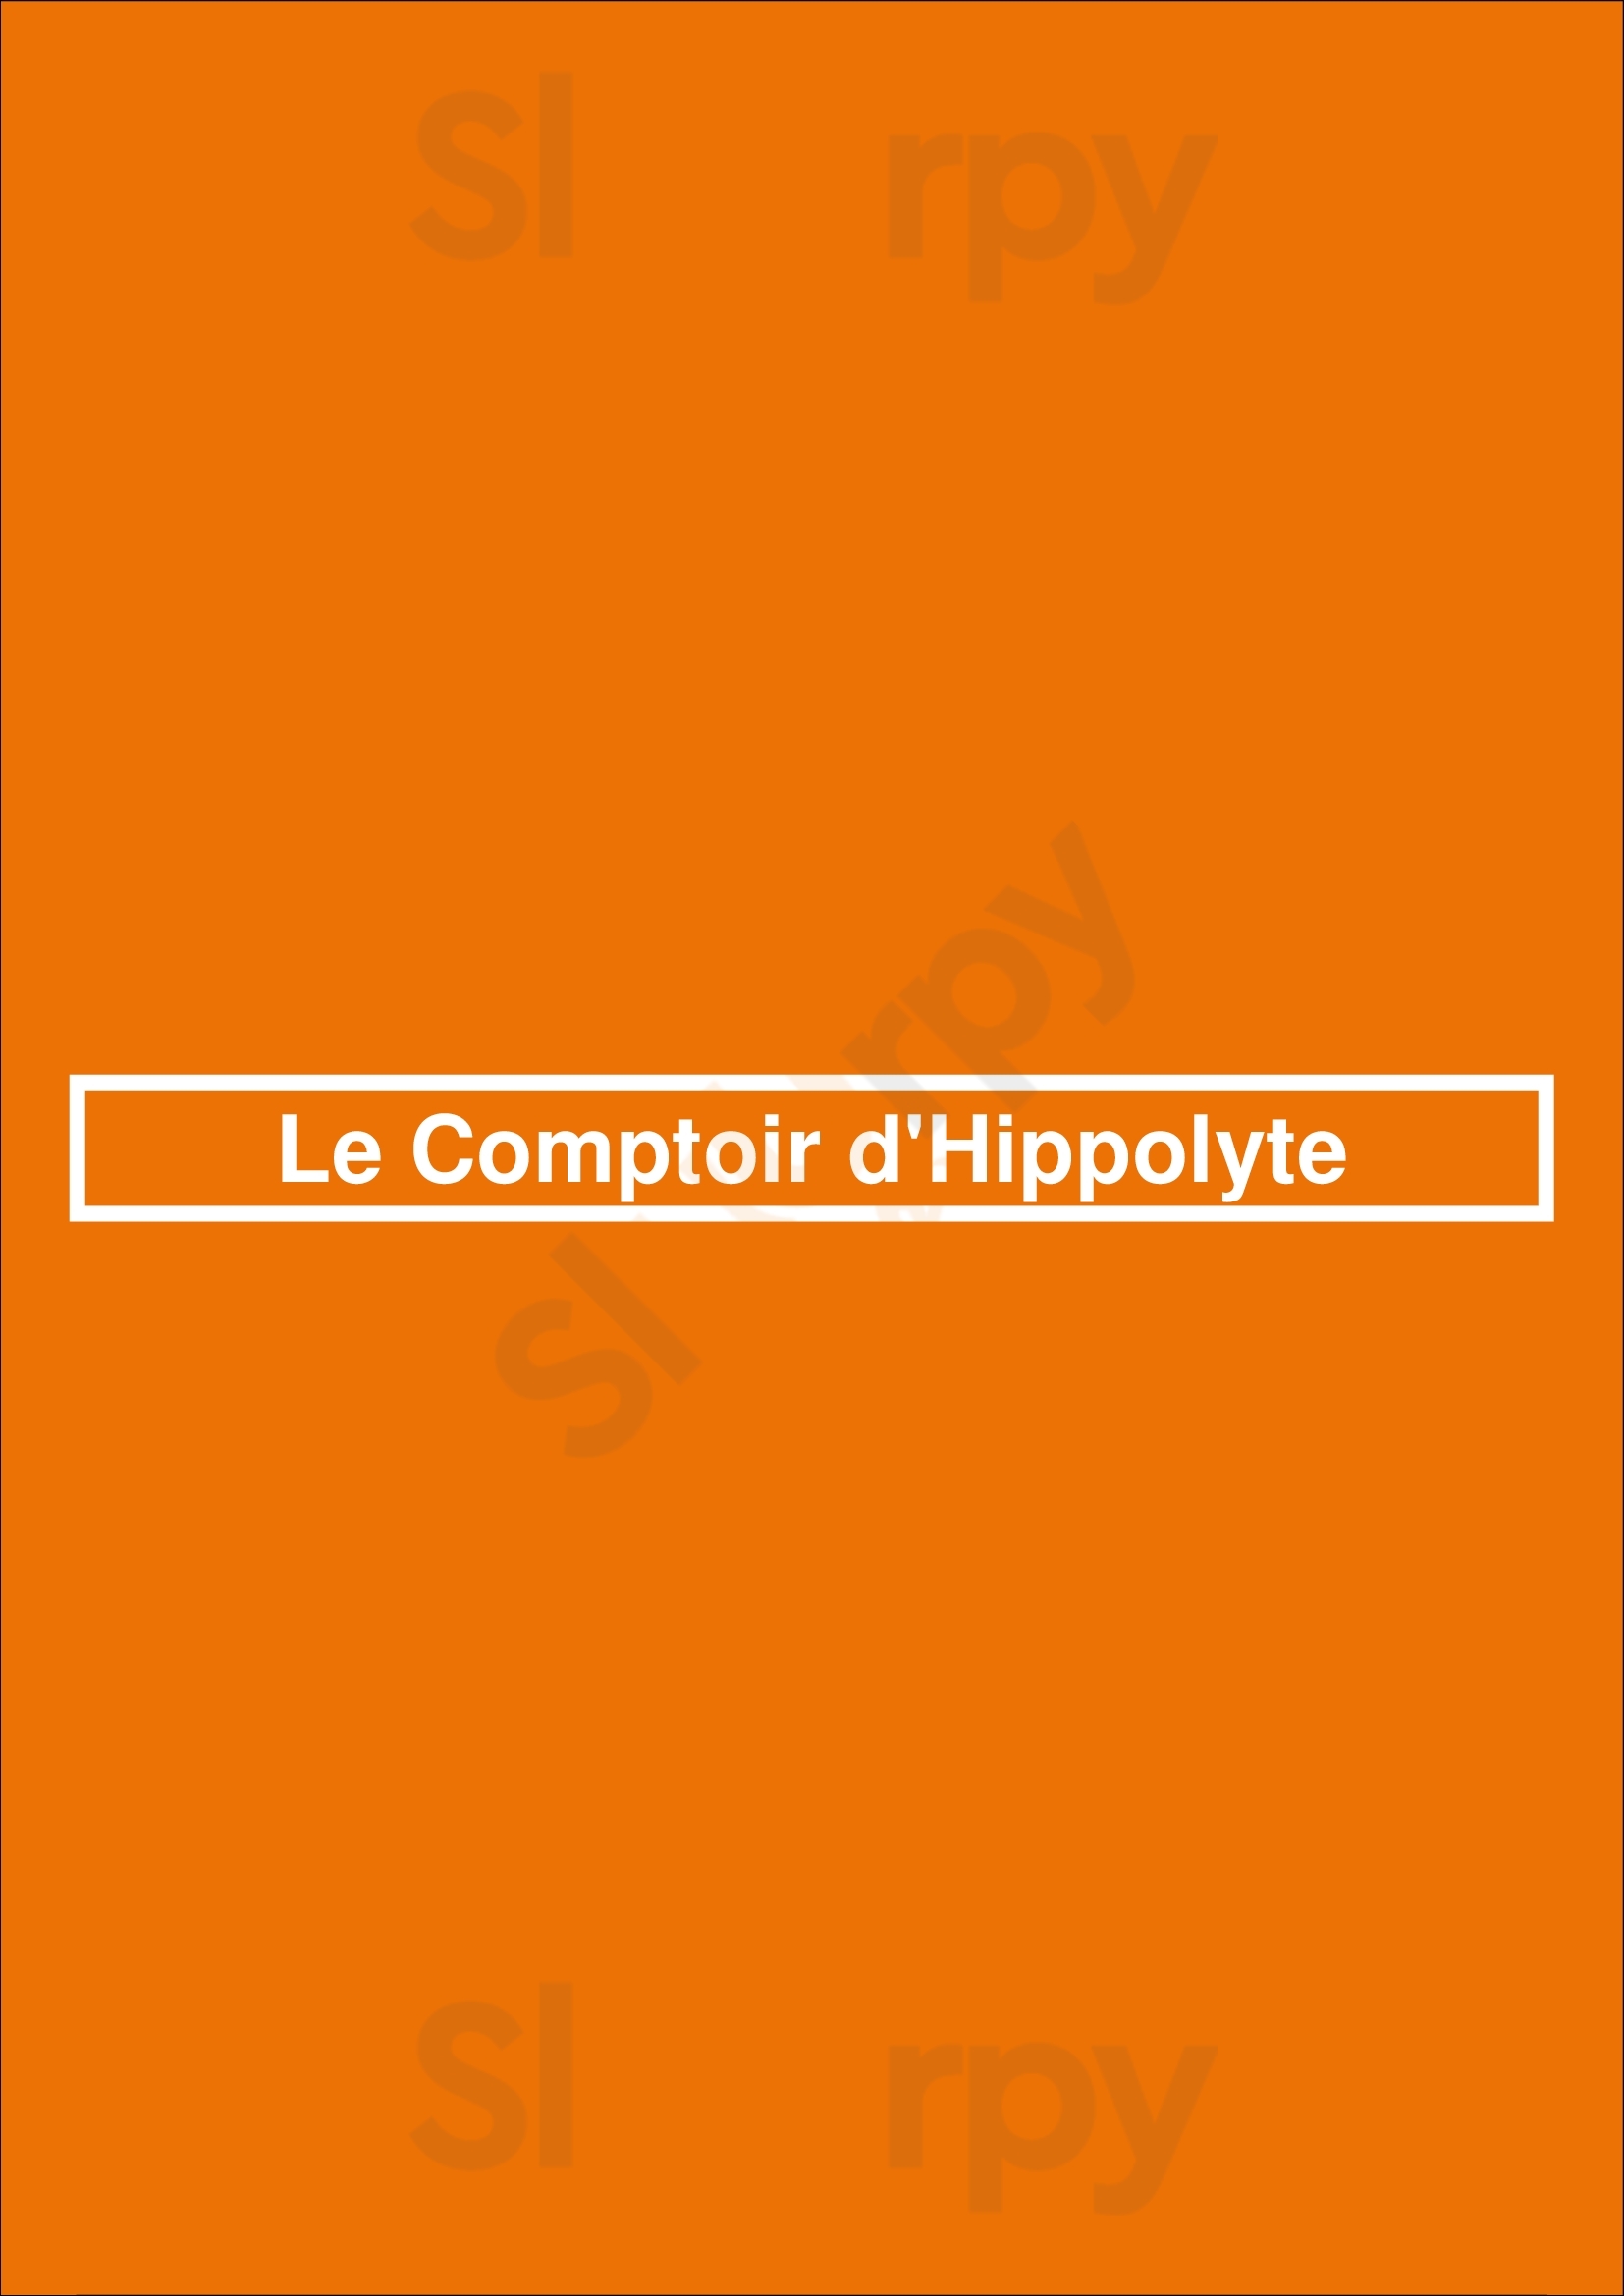 Le Comptoir D'hippolyte Grenoble Menu - 1